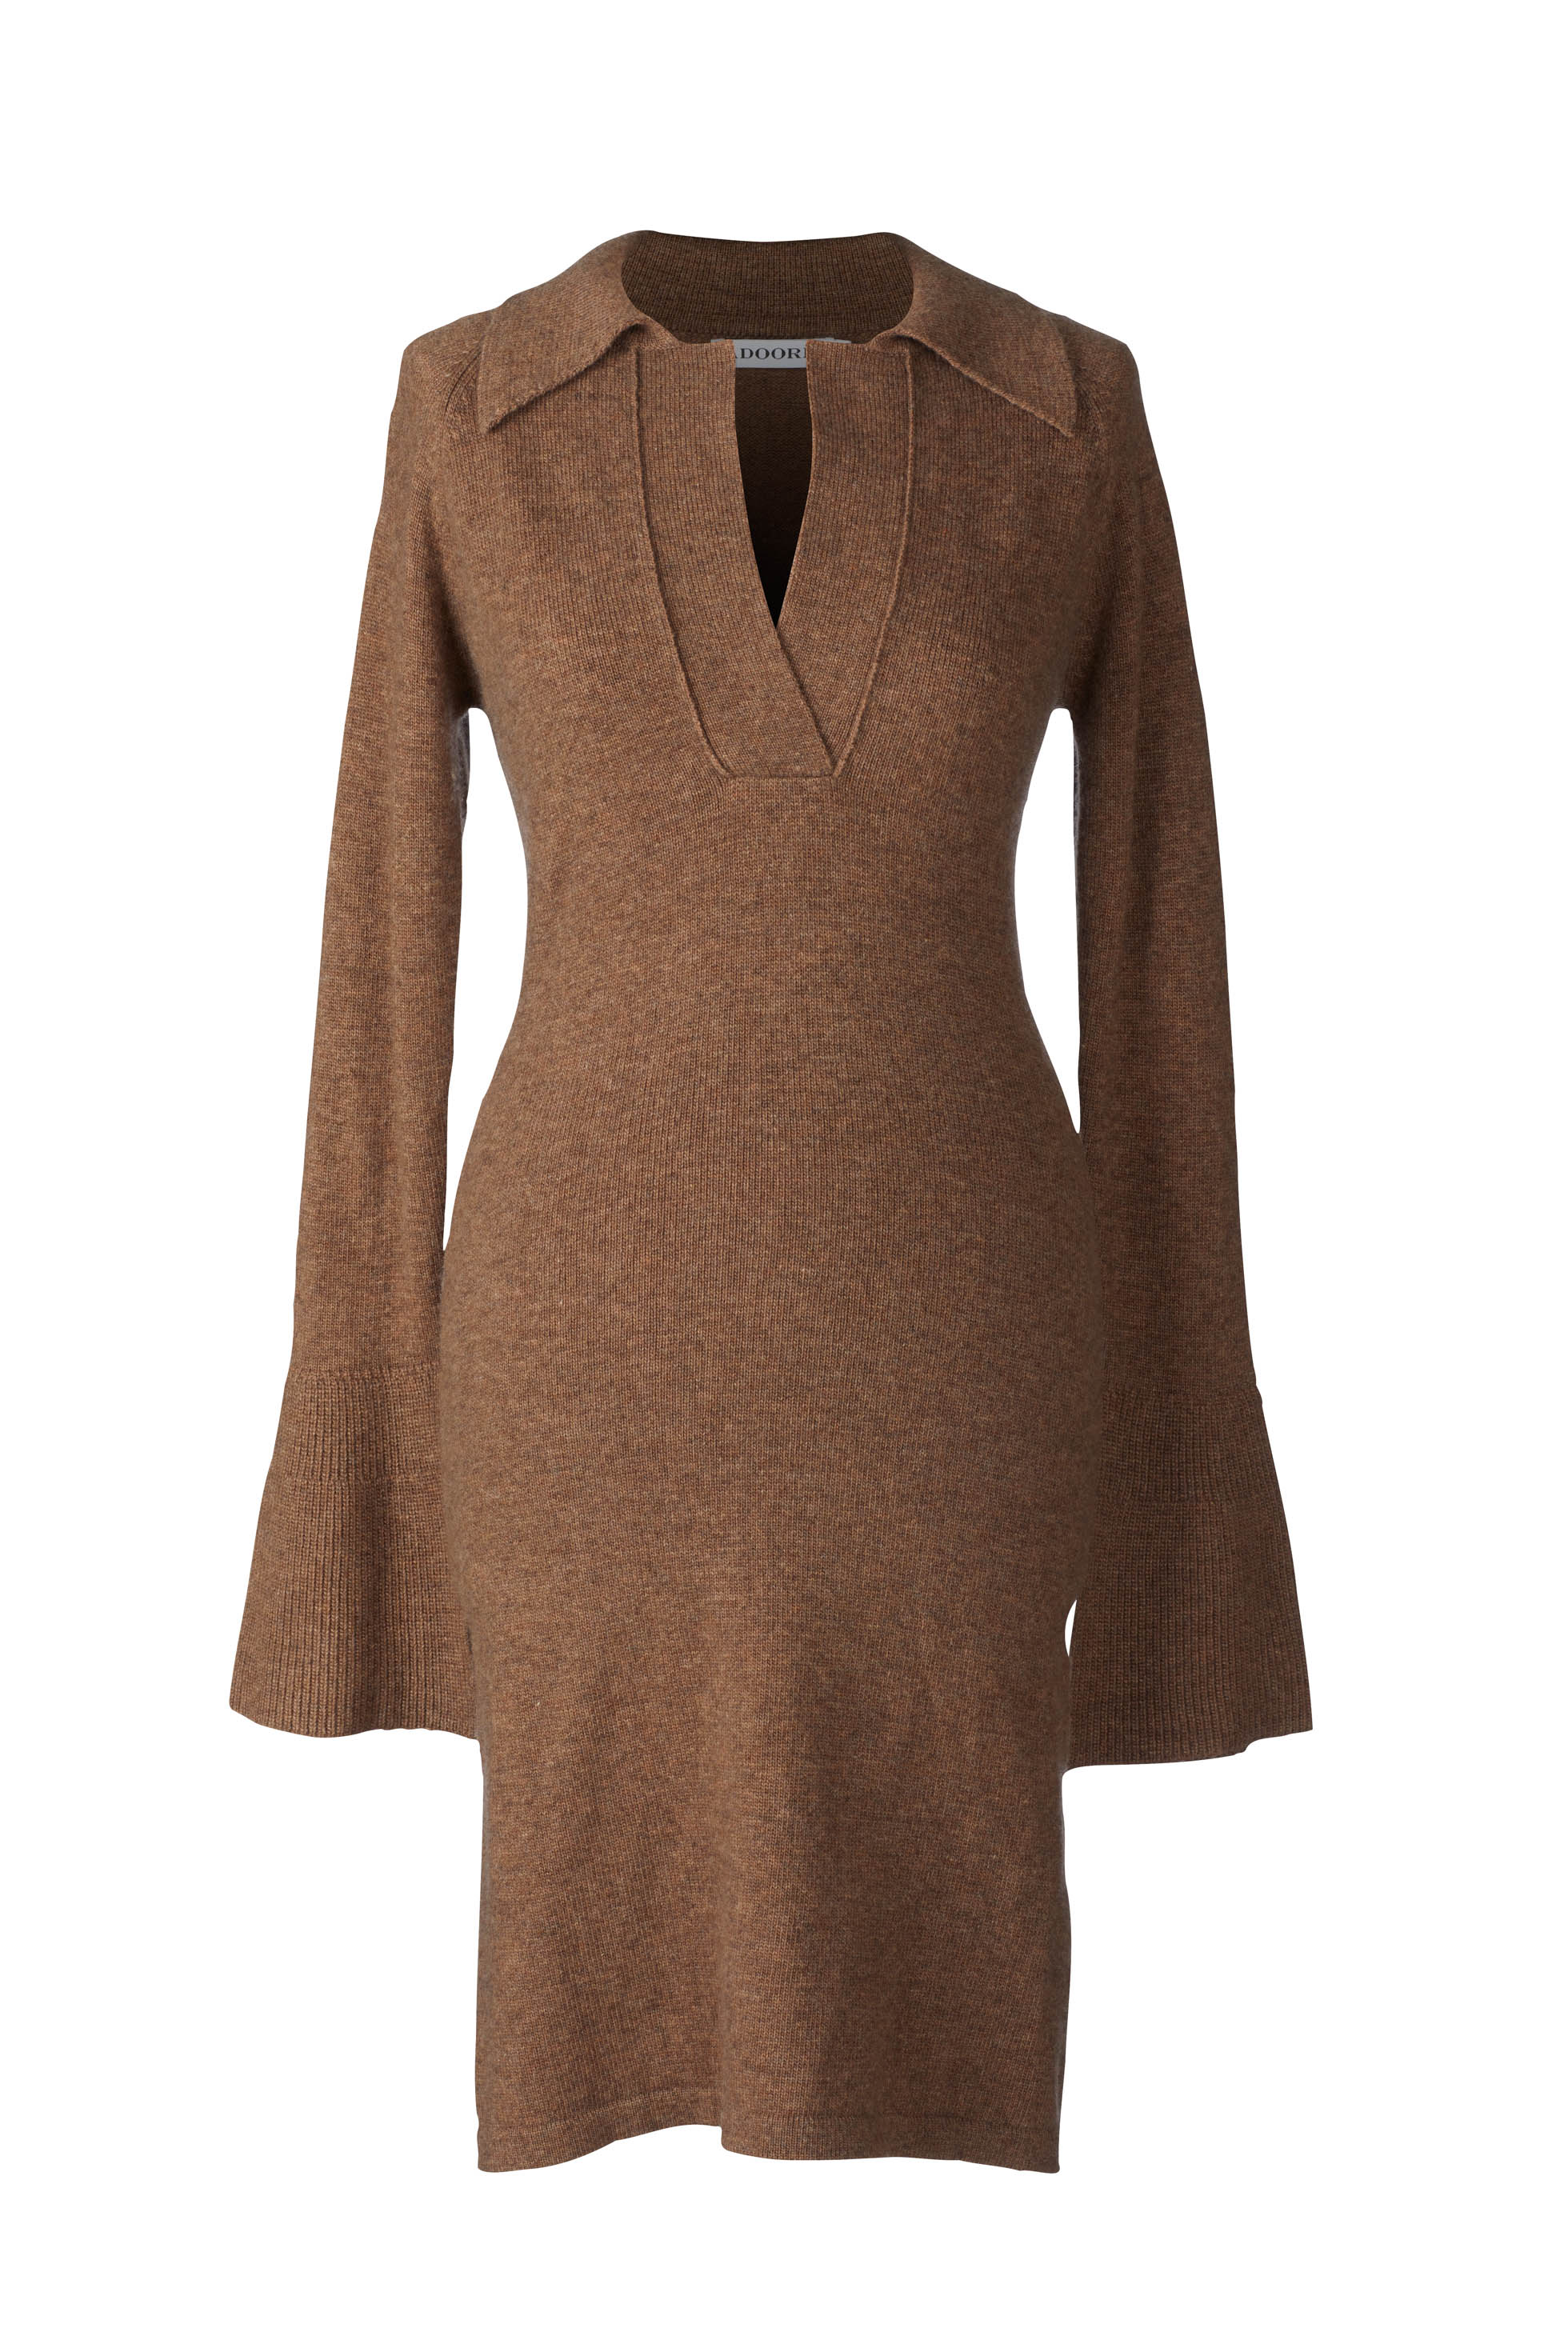 Short dress. Brown Dress. Midi-dress. Collar. Brown. Long sleeves. Knitted dress. V-necked. Springdress. image